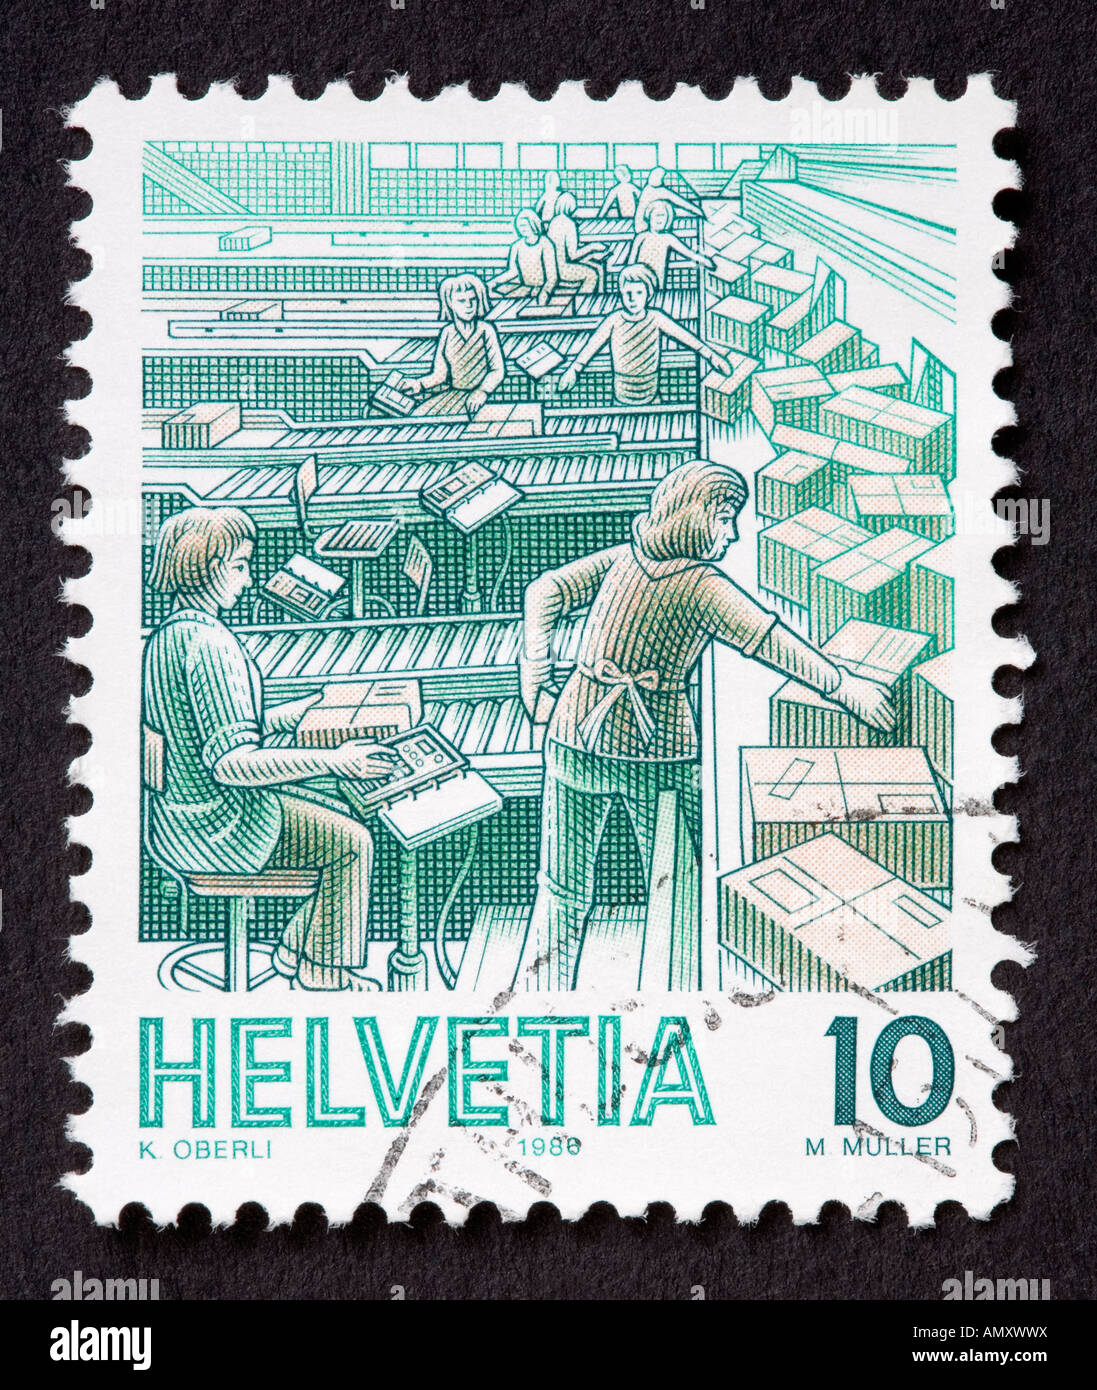 Swiss postage stamp Stock Photo - Alamy